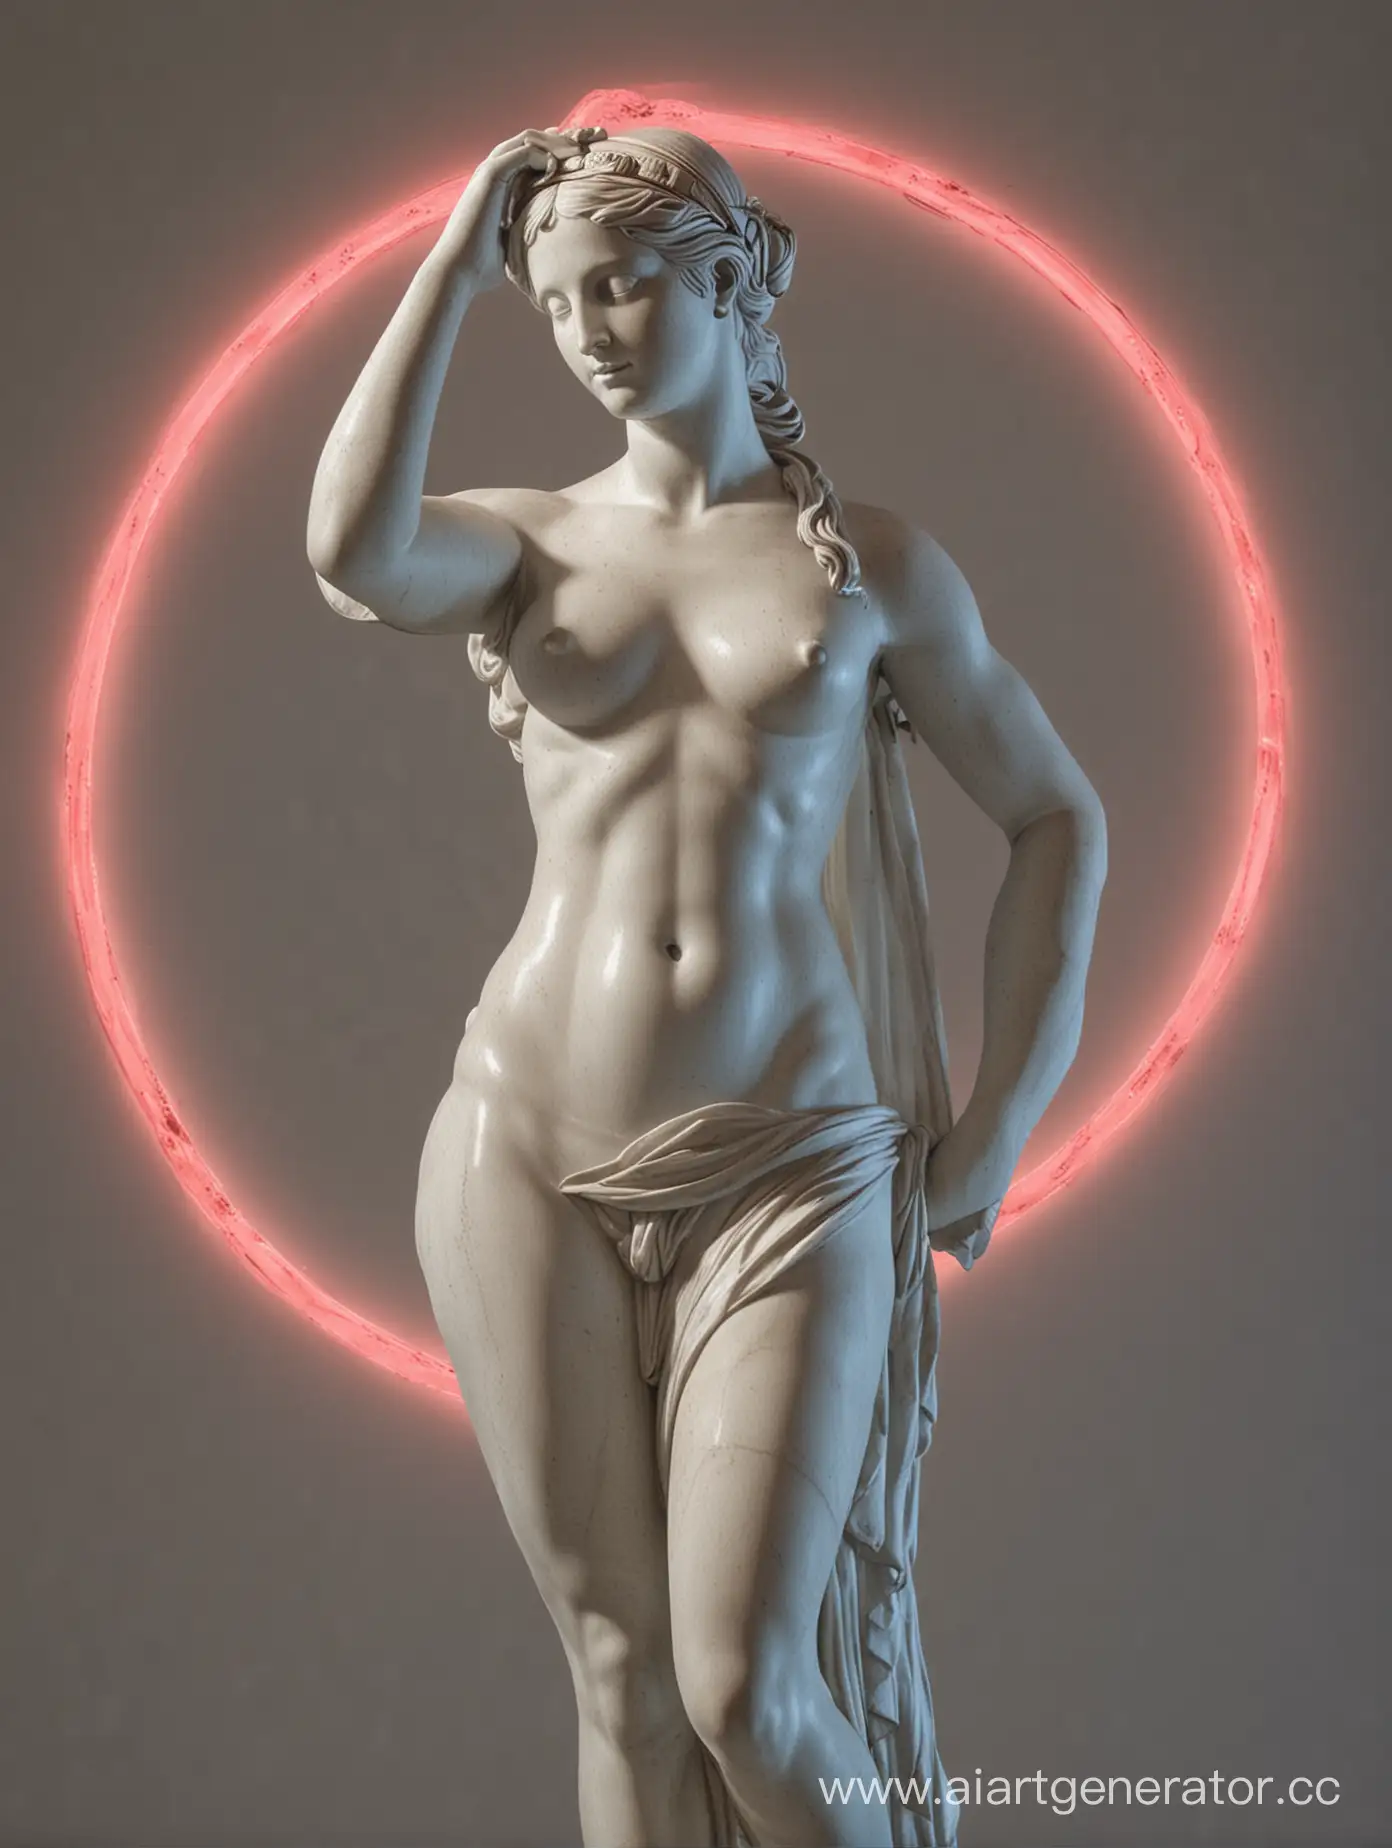 Neon-Halo-Adorns-Statue-of-Venus-de-Milo